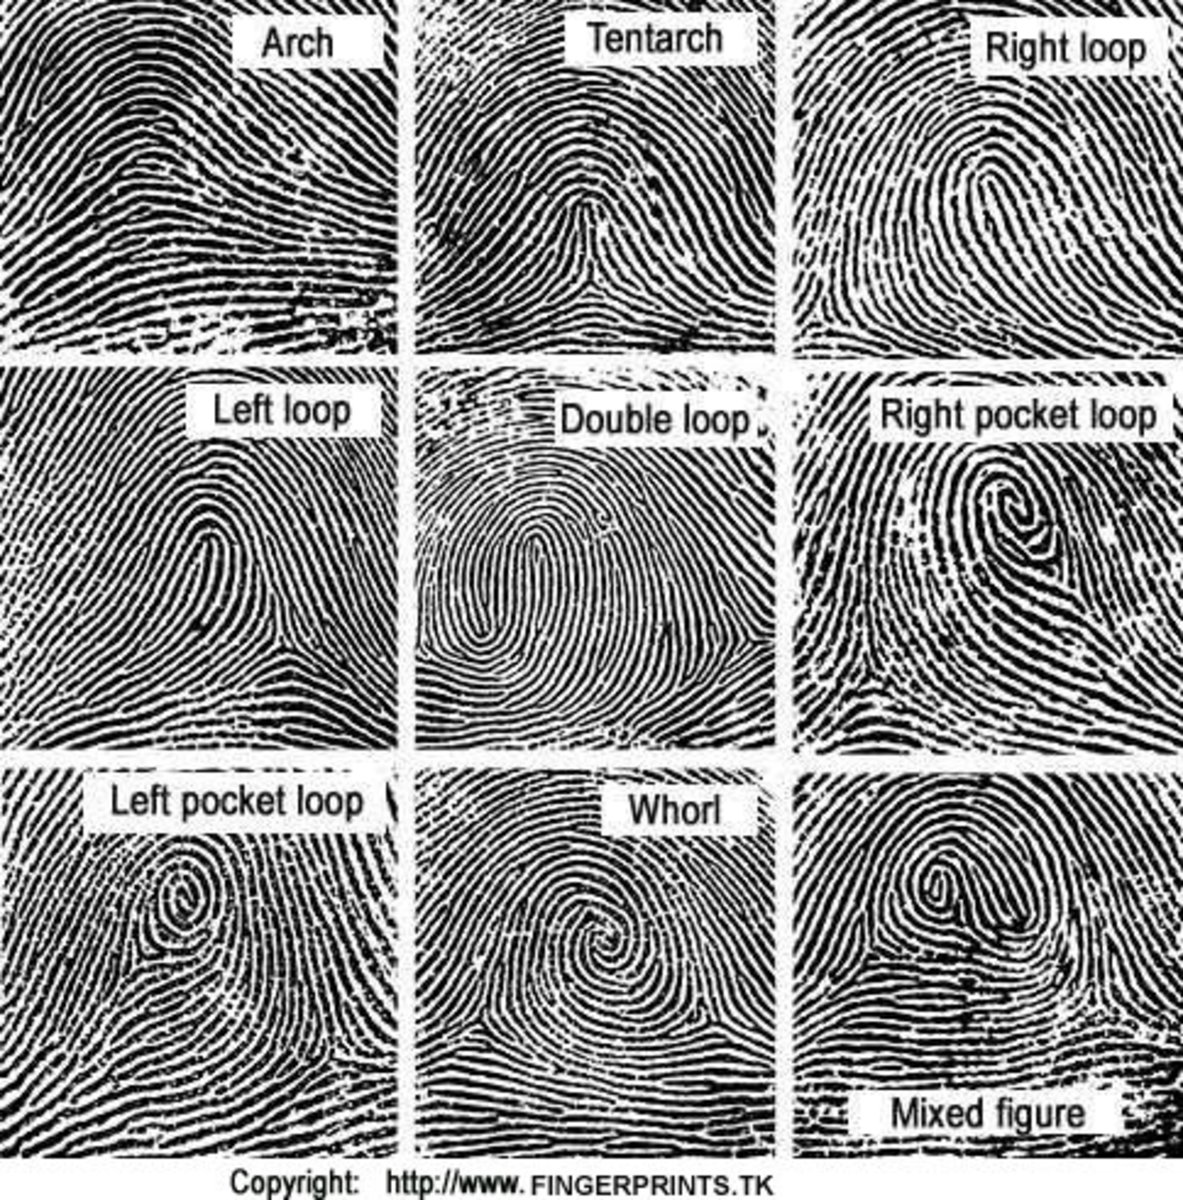 Examples of fingerprint patterns.